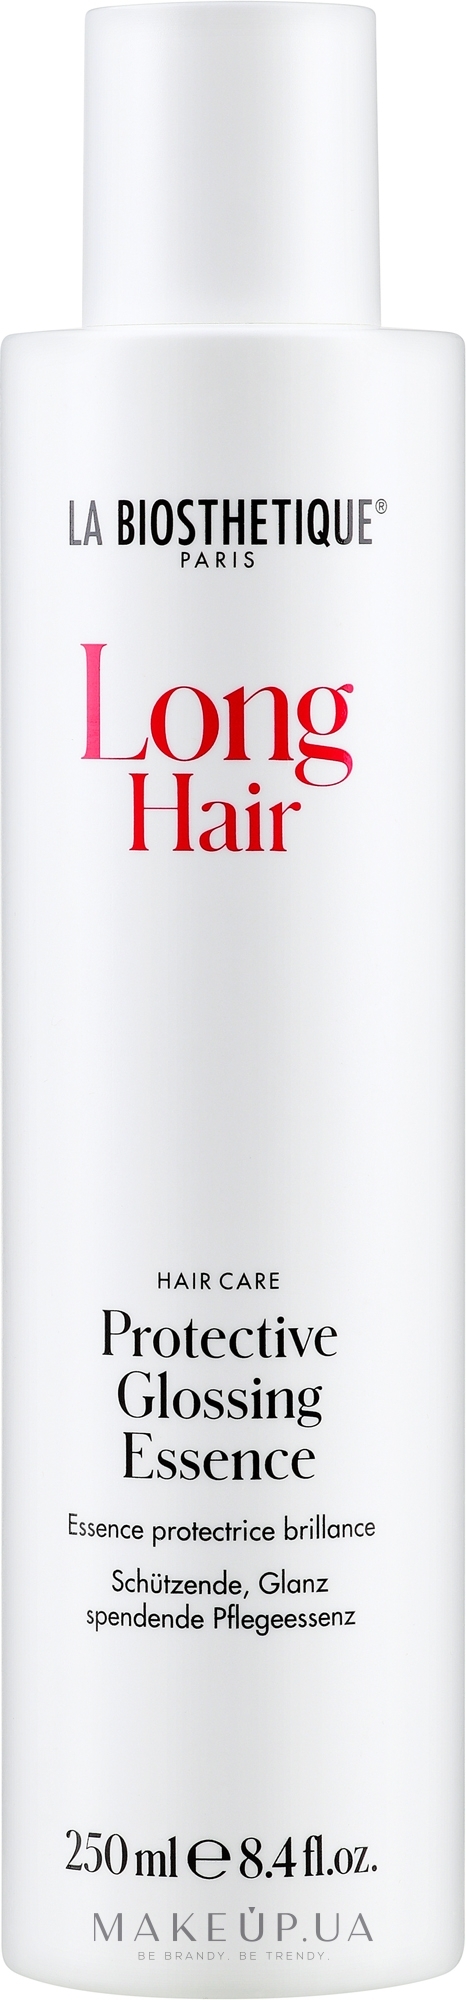 Захисна есенція для довгого волосся - La Biosthetique Long Hair Protective Glossing Essence — фото 250ml